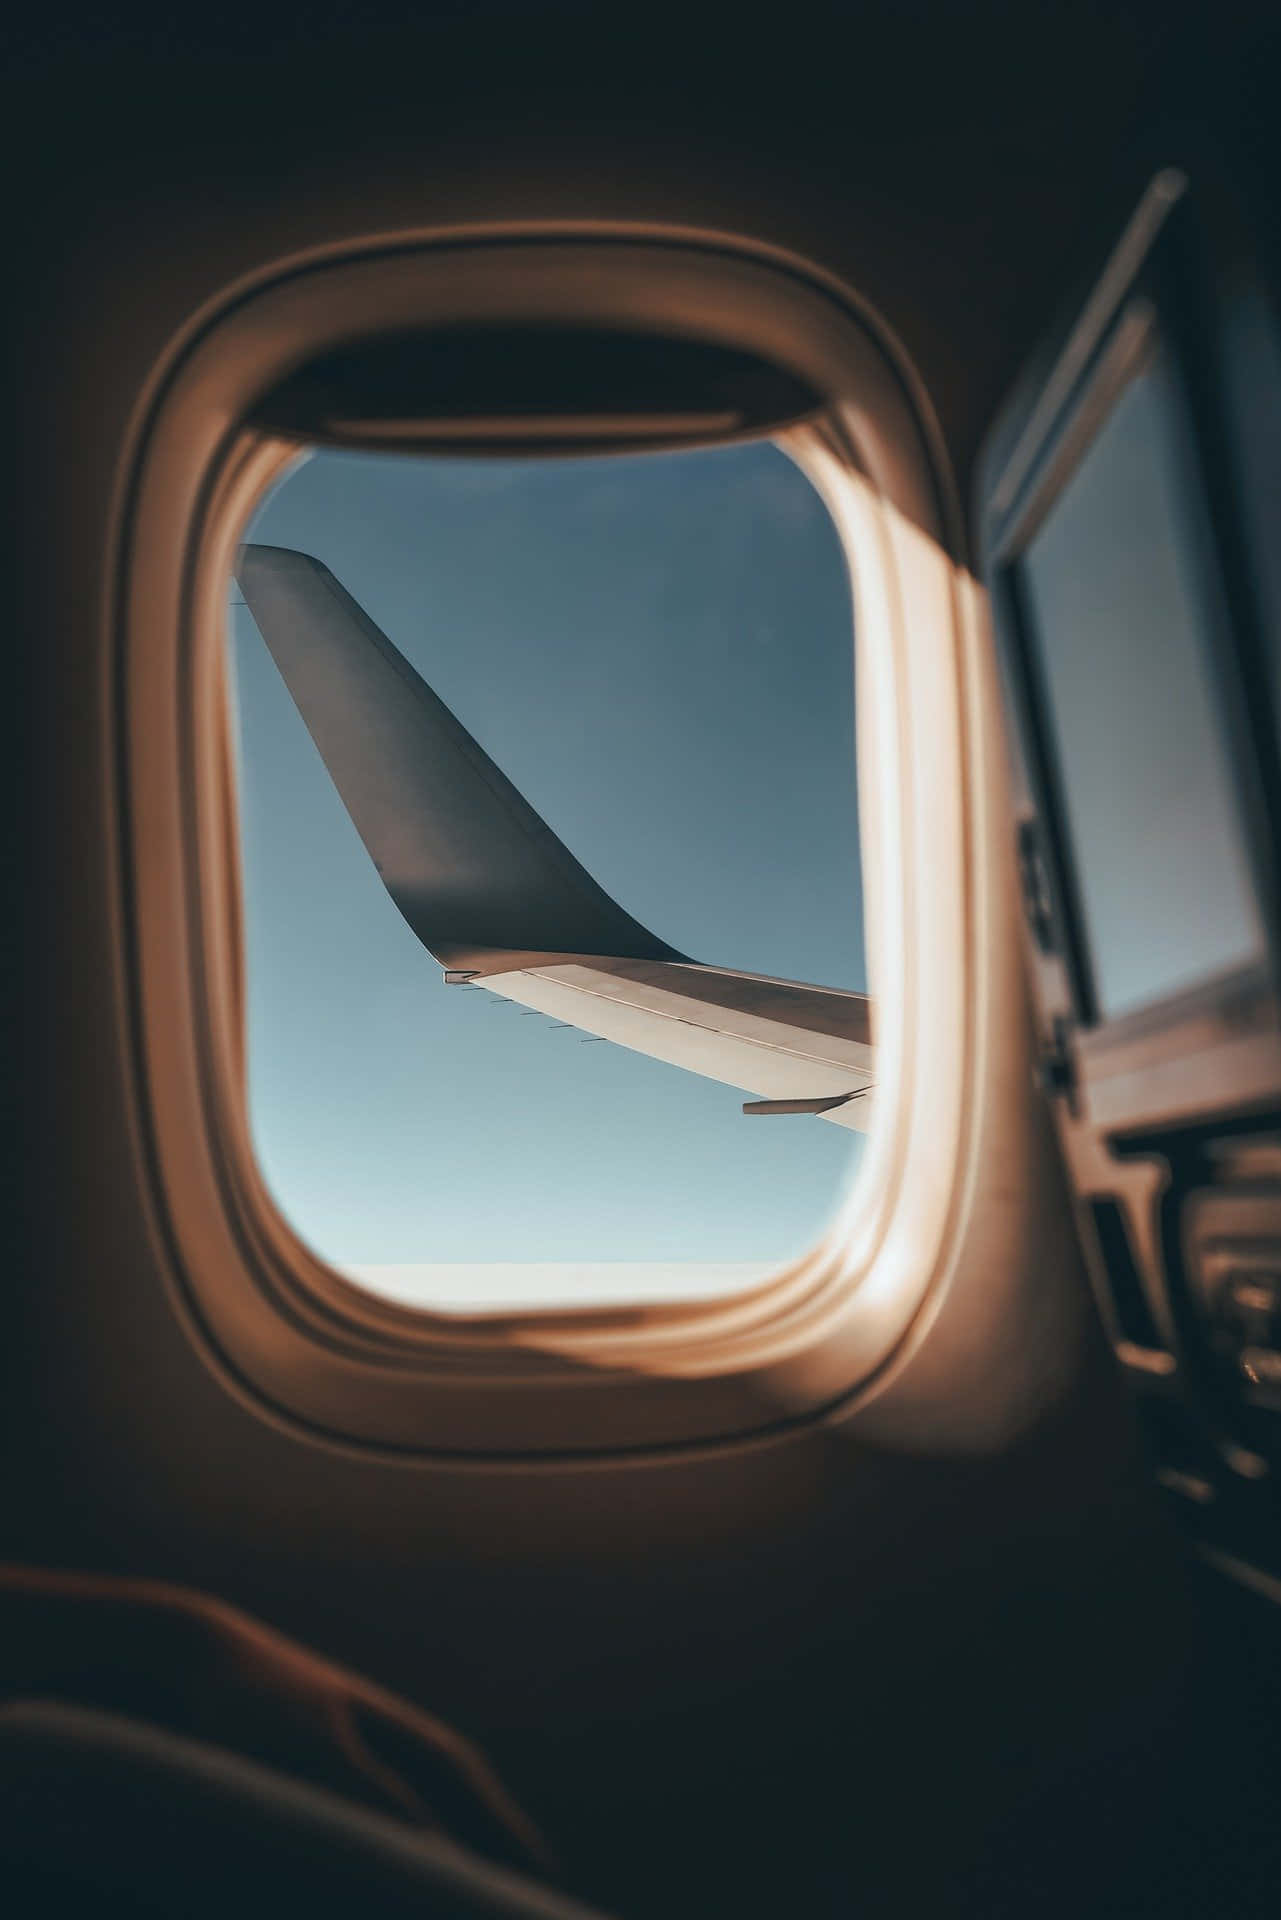 Sonnenuntergangästhetik Fenster Im Inneren Des Flugzeugs Wallpaper